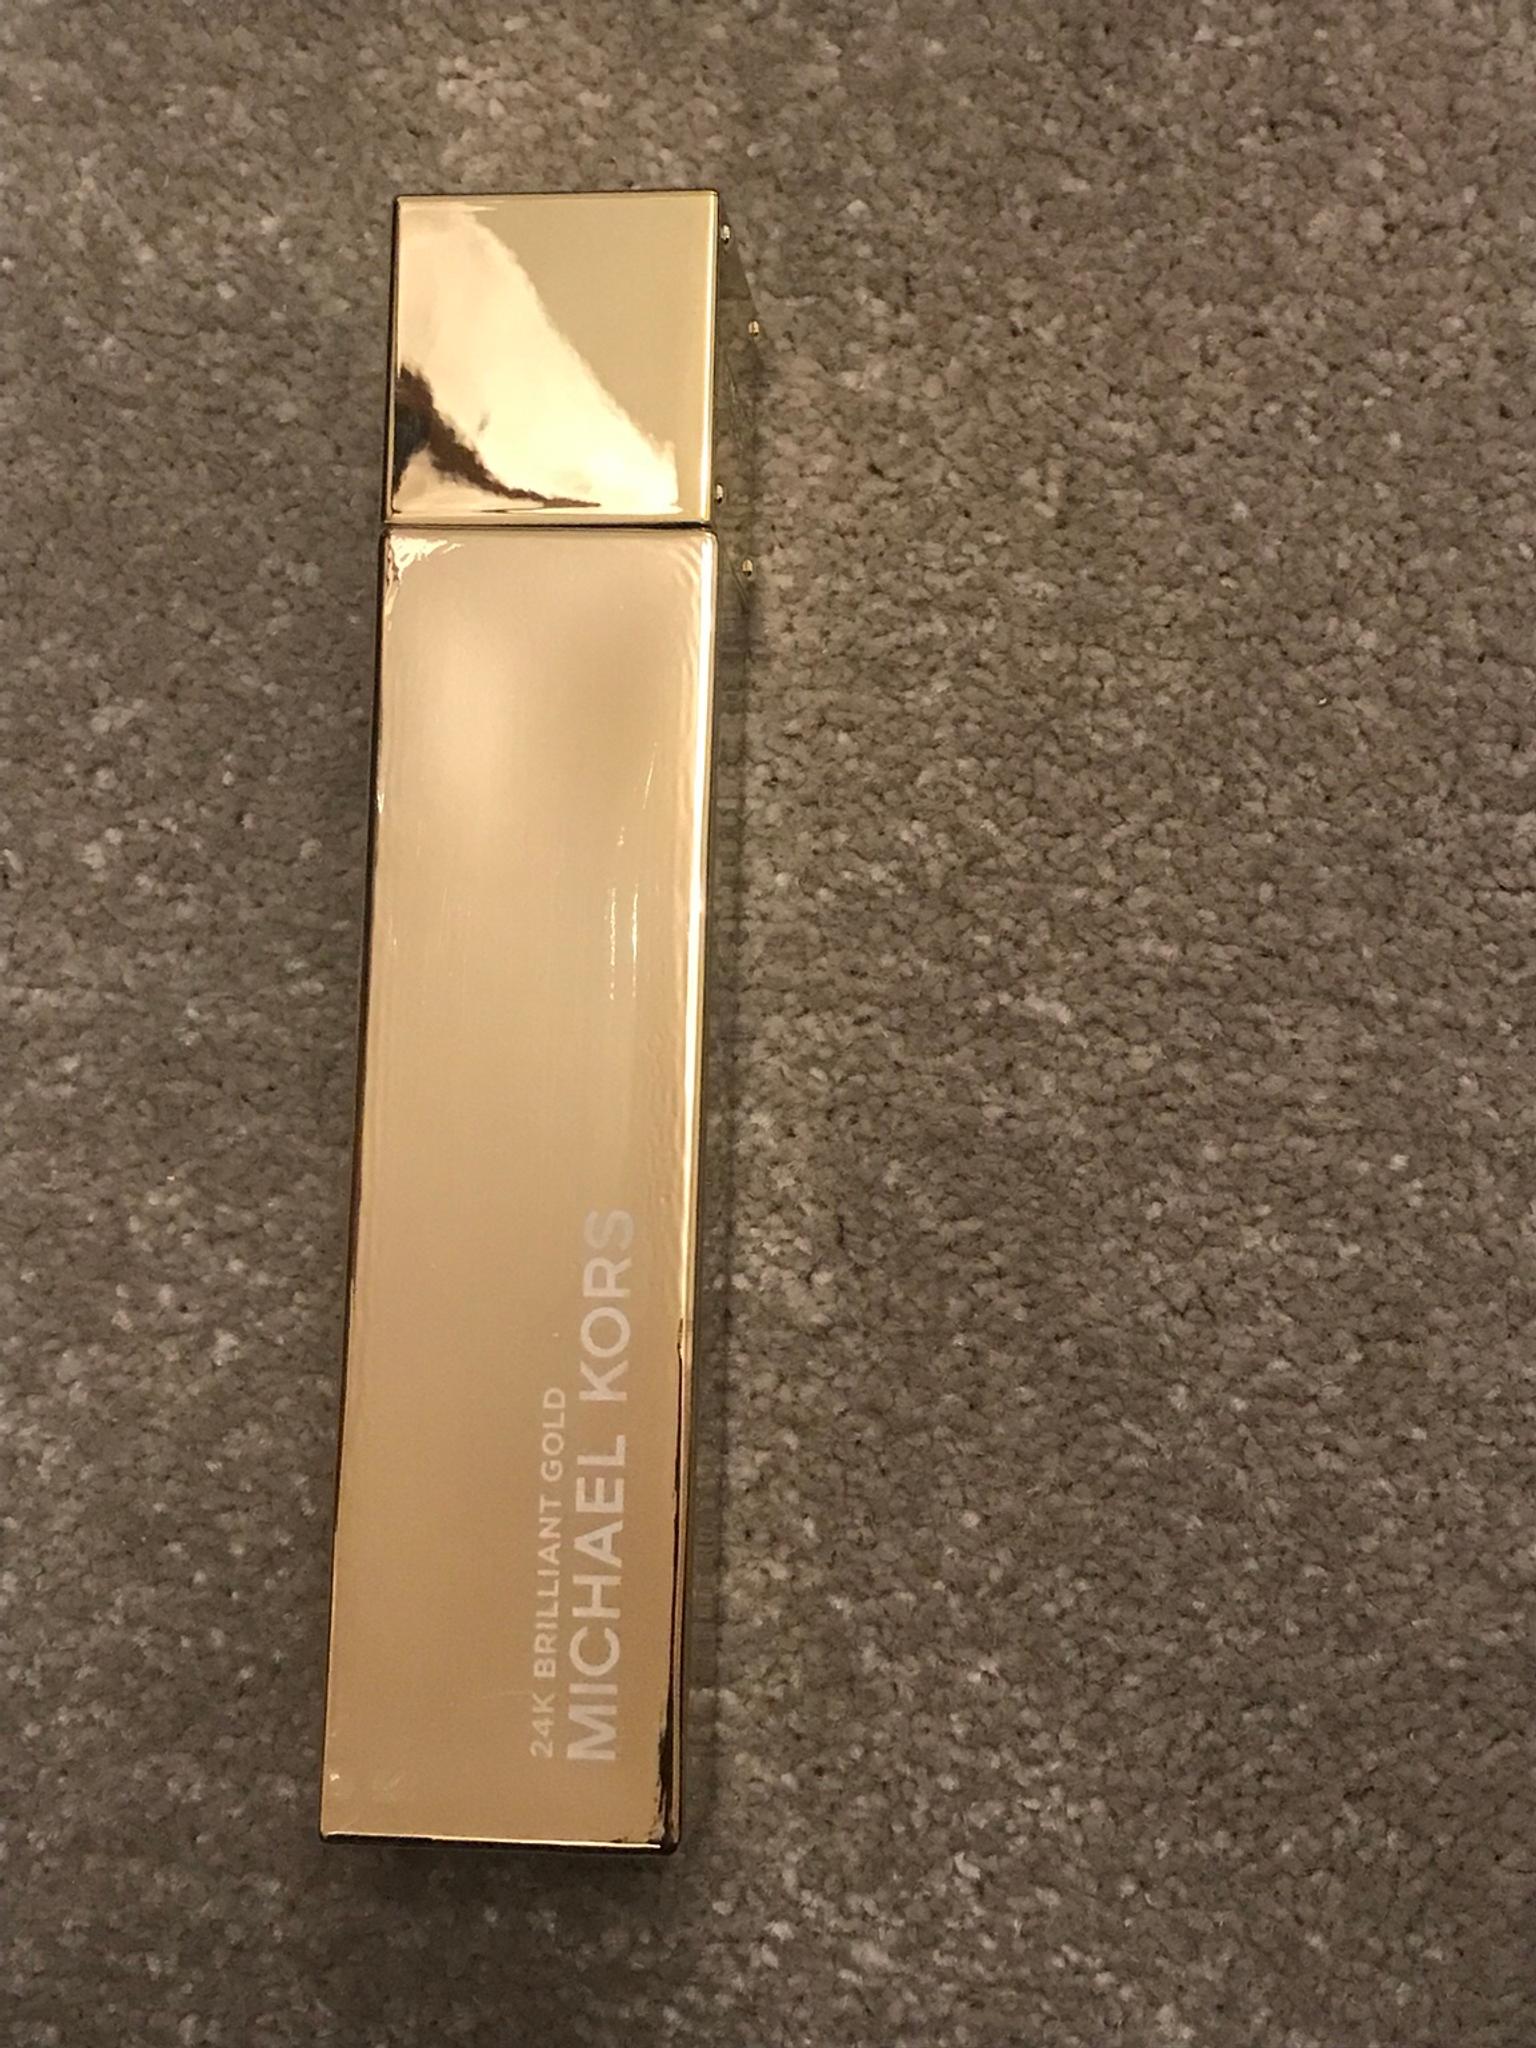 michael kors 24k brilliant gold perfume